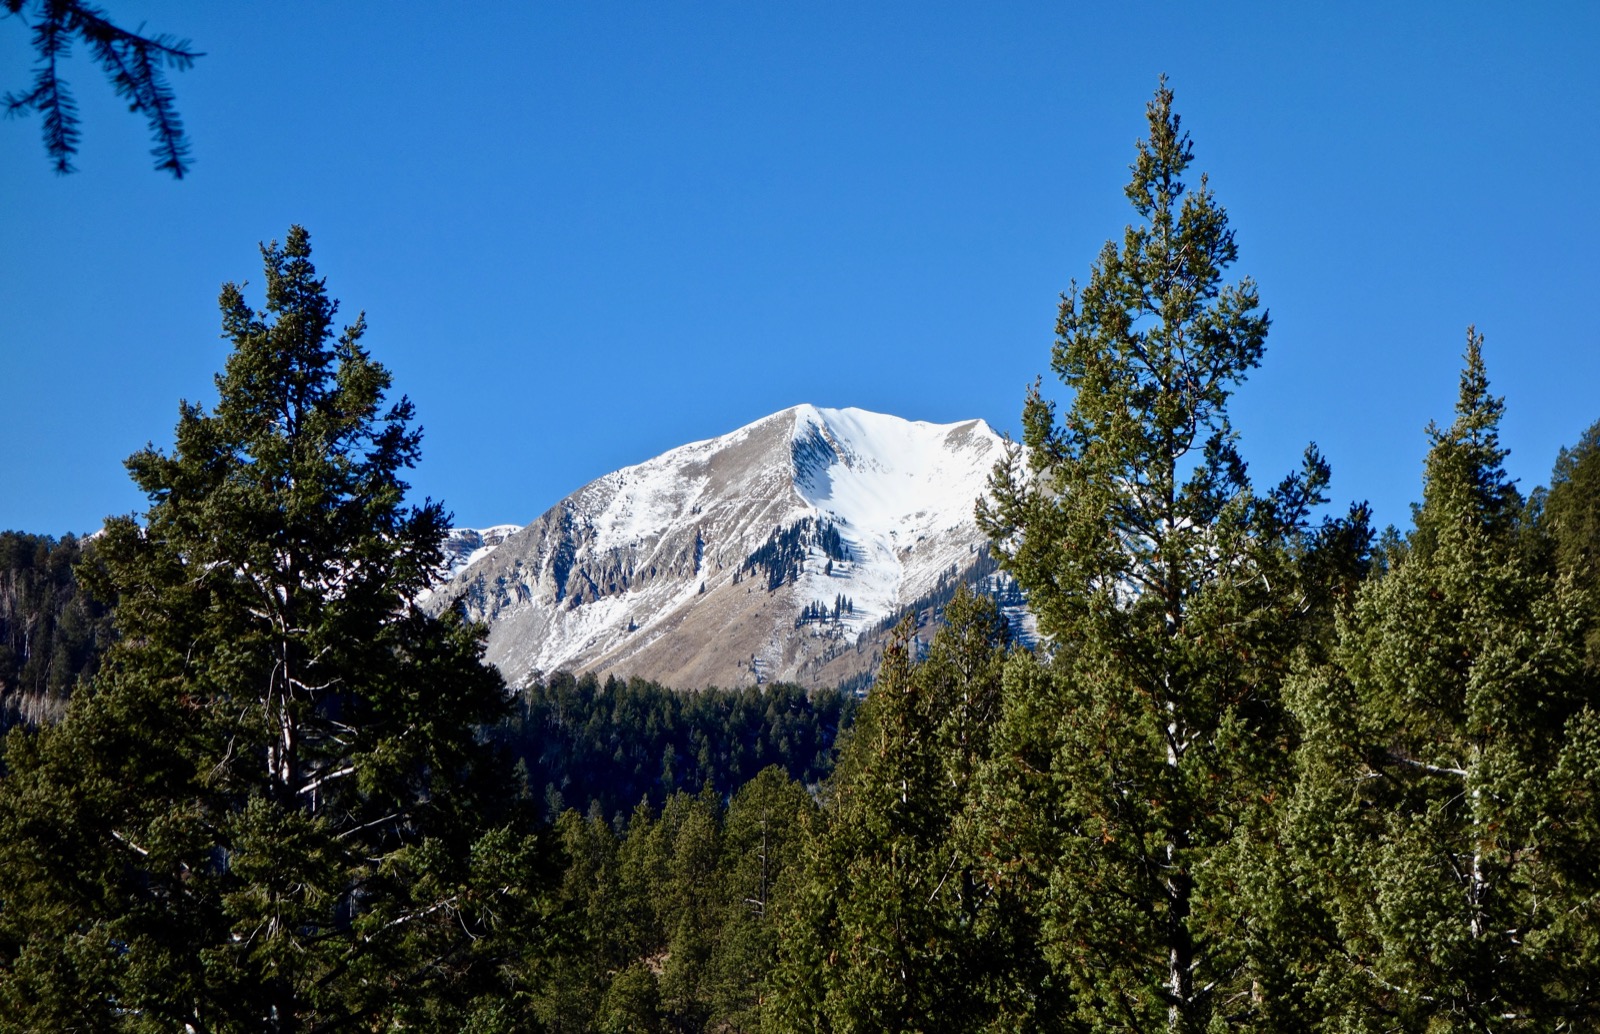 Lassen Volcanic National Park: A fiery, snowy trek – The Denver Post